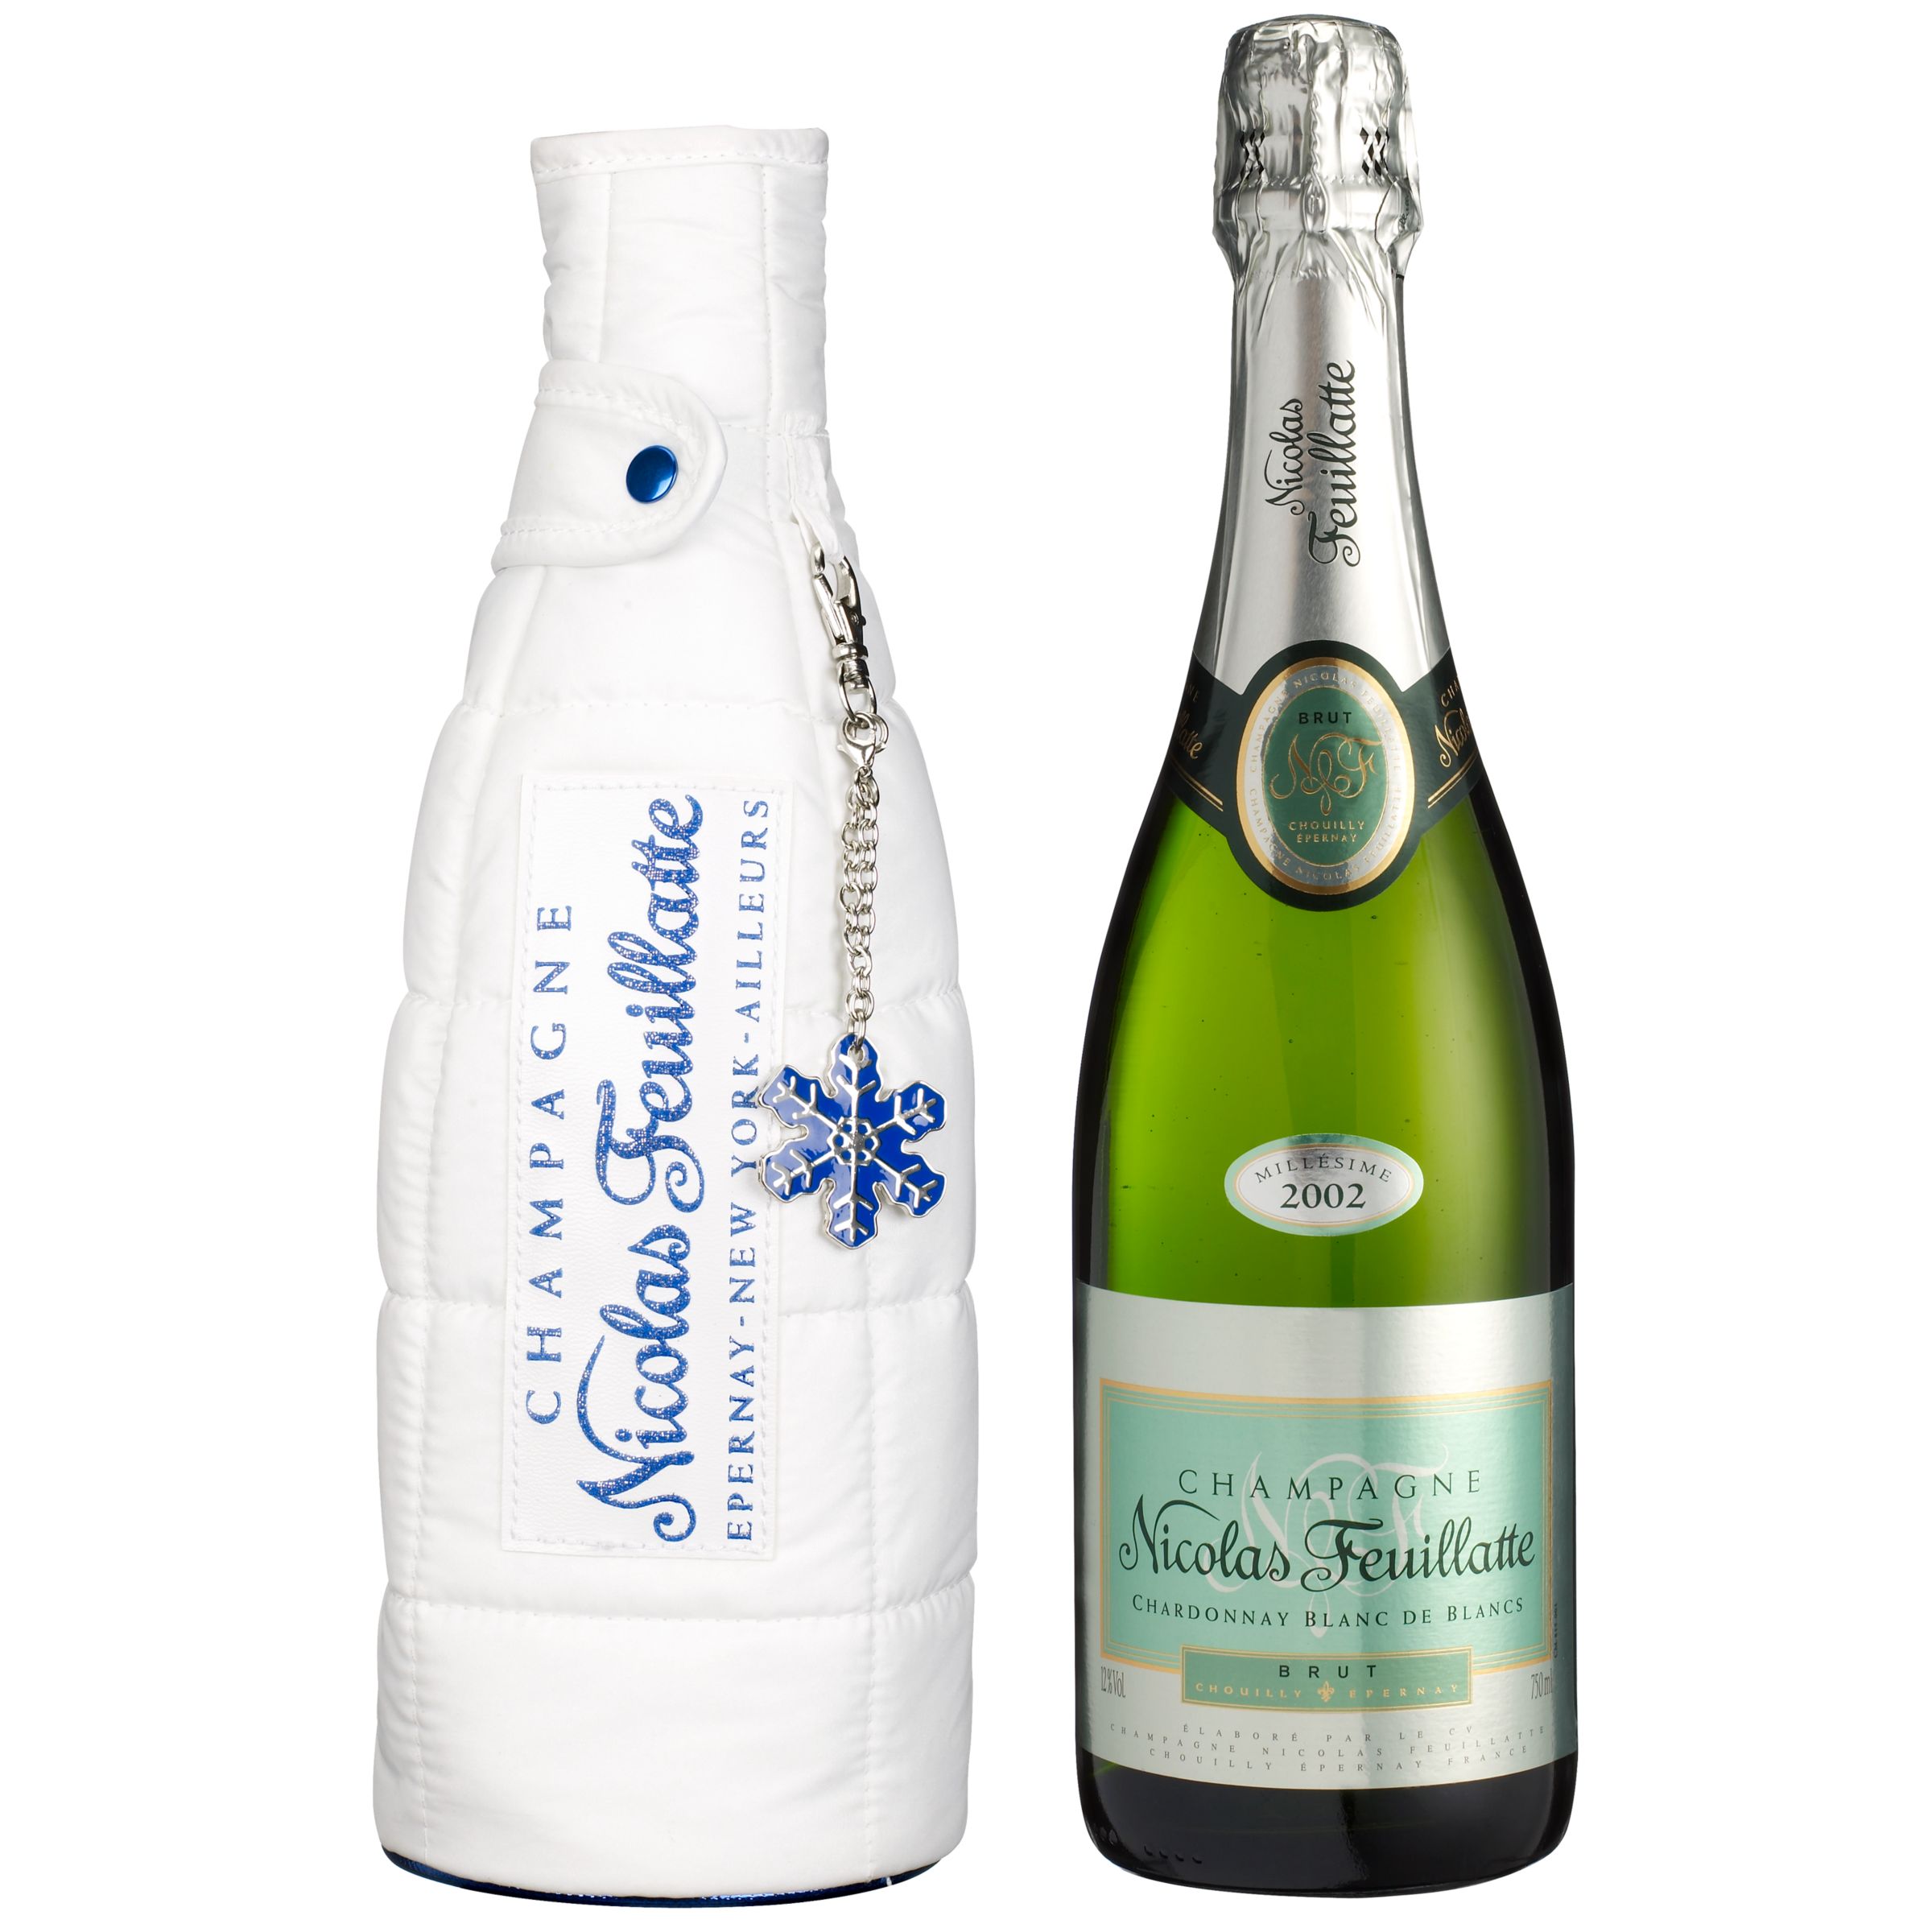 Nicolas Feuillatte Brut Chardonnay Blanc de